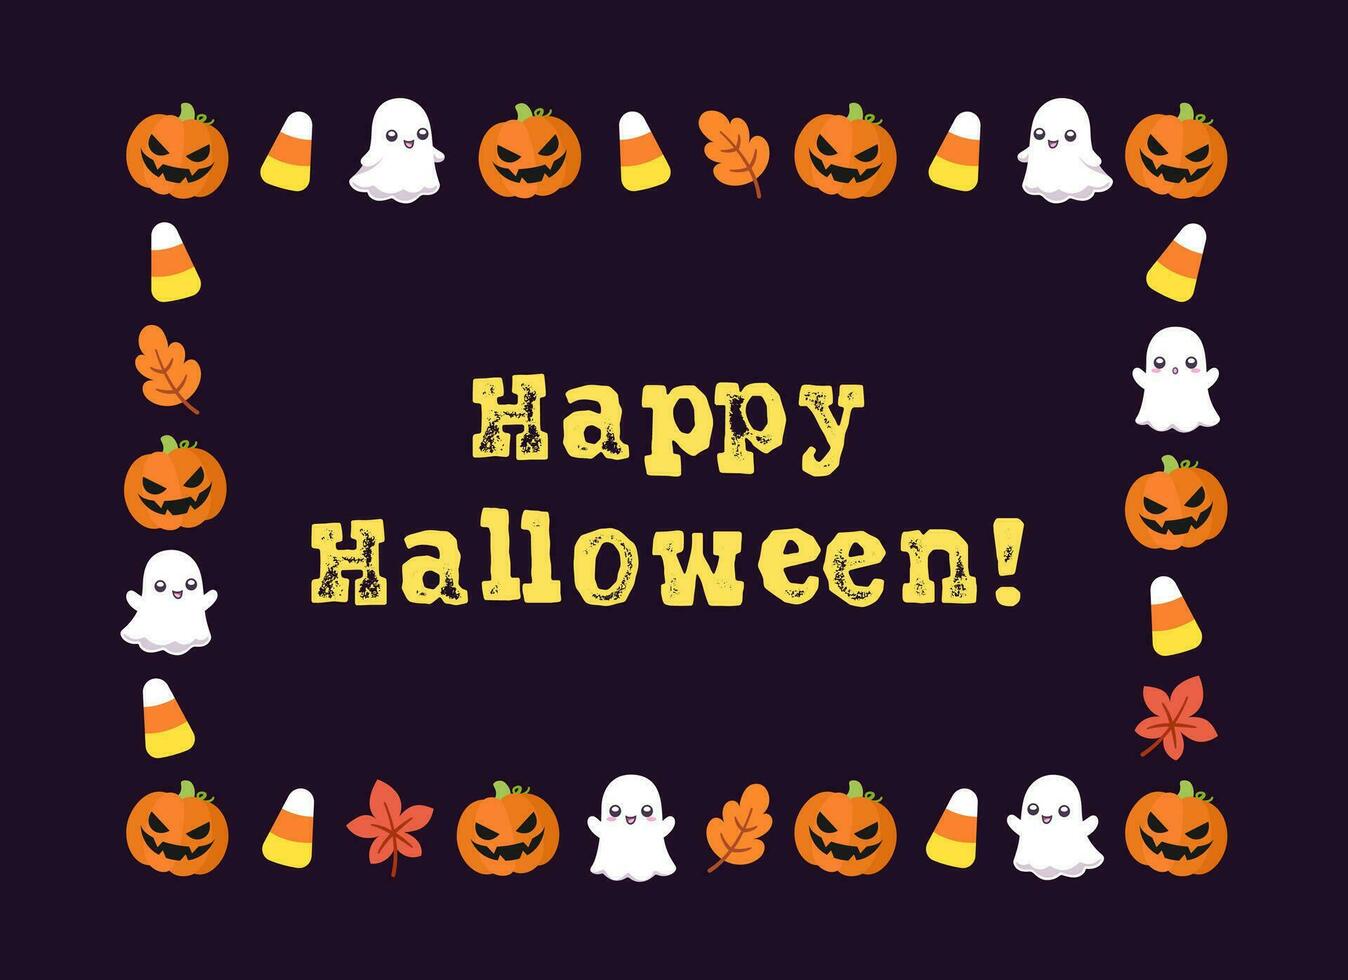 Cute Halloween card frame template. Rectangle Halloween border design with cartoon ghost, jack o lantern, pumpkins, candy corn. Social media banner vector illustration